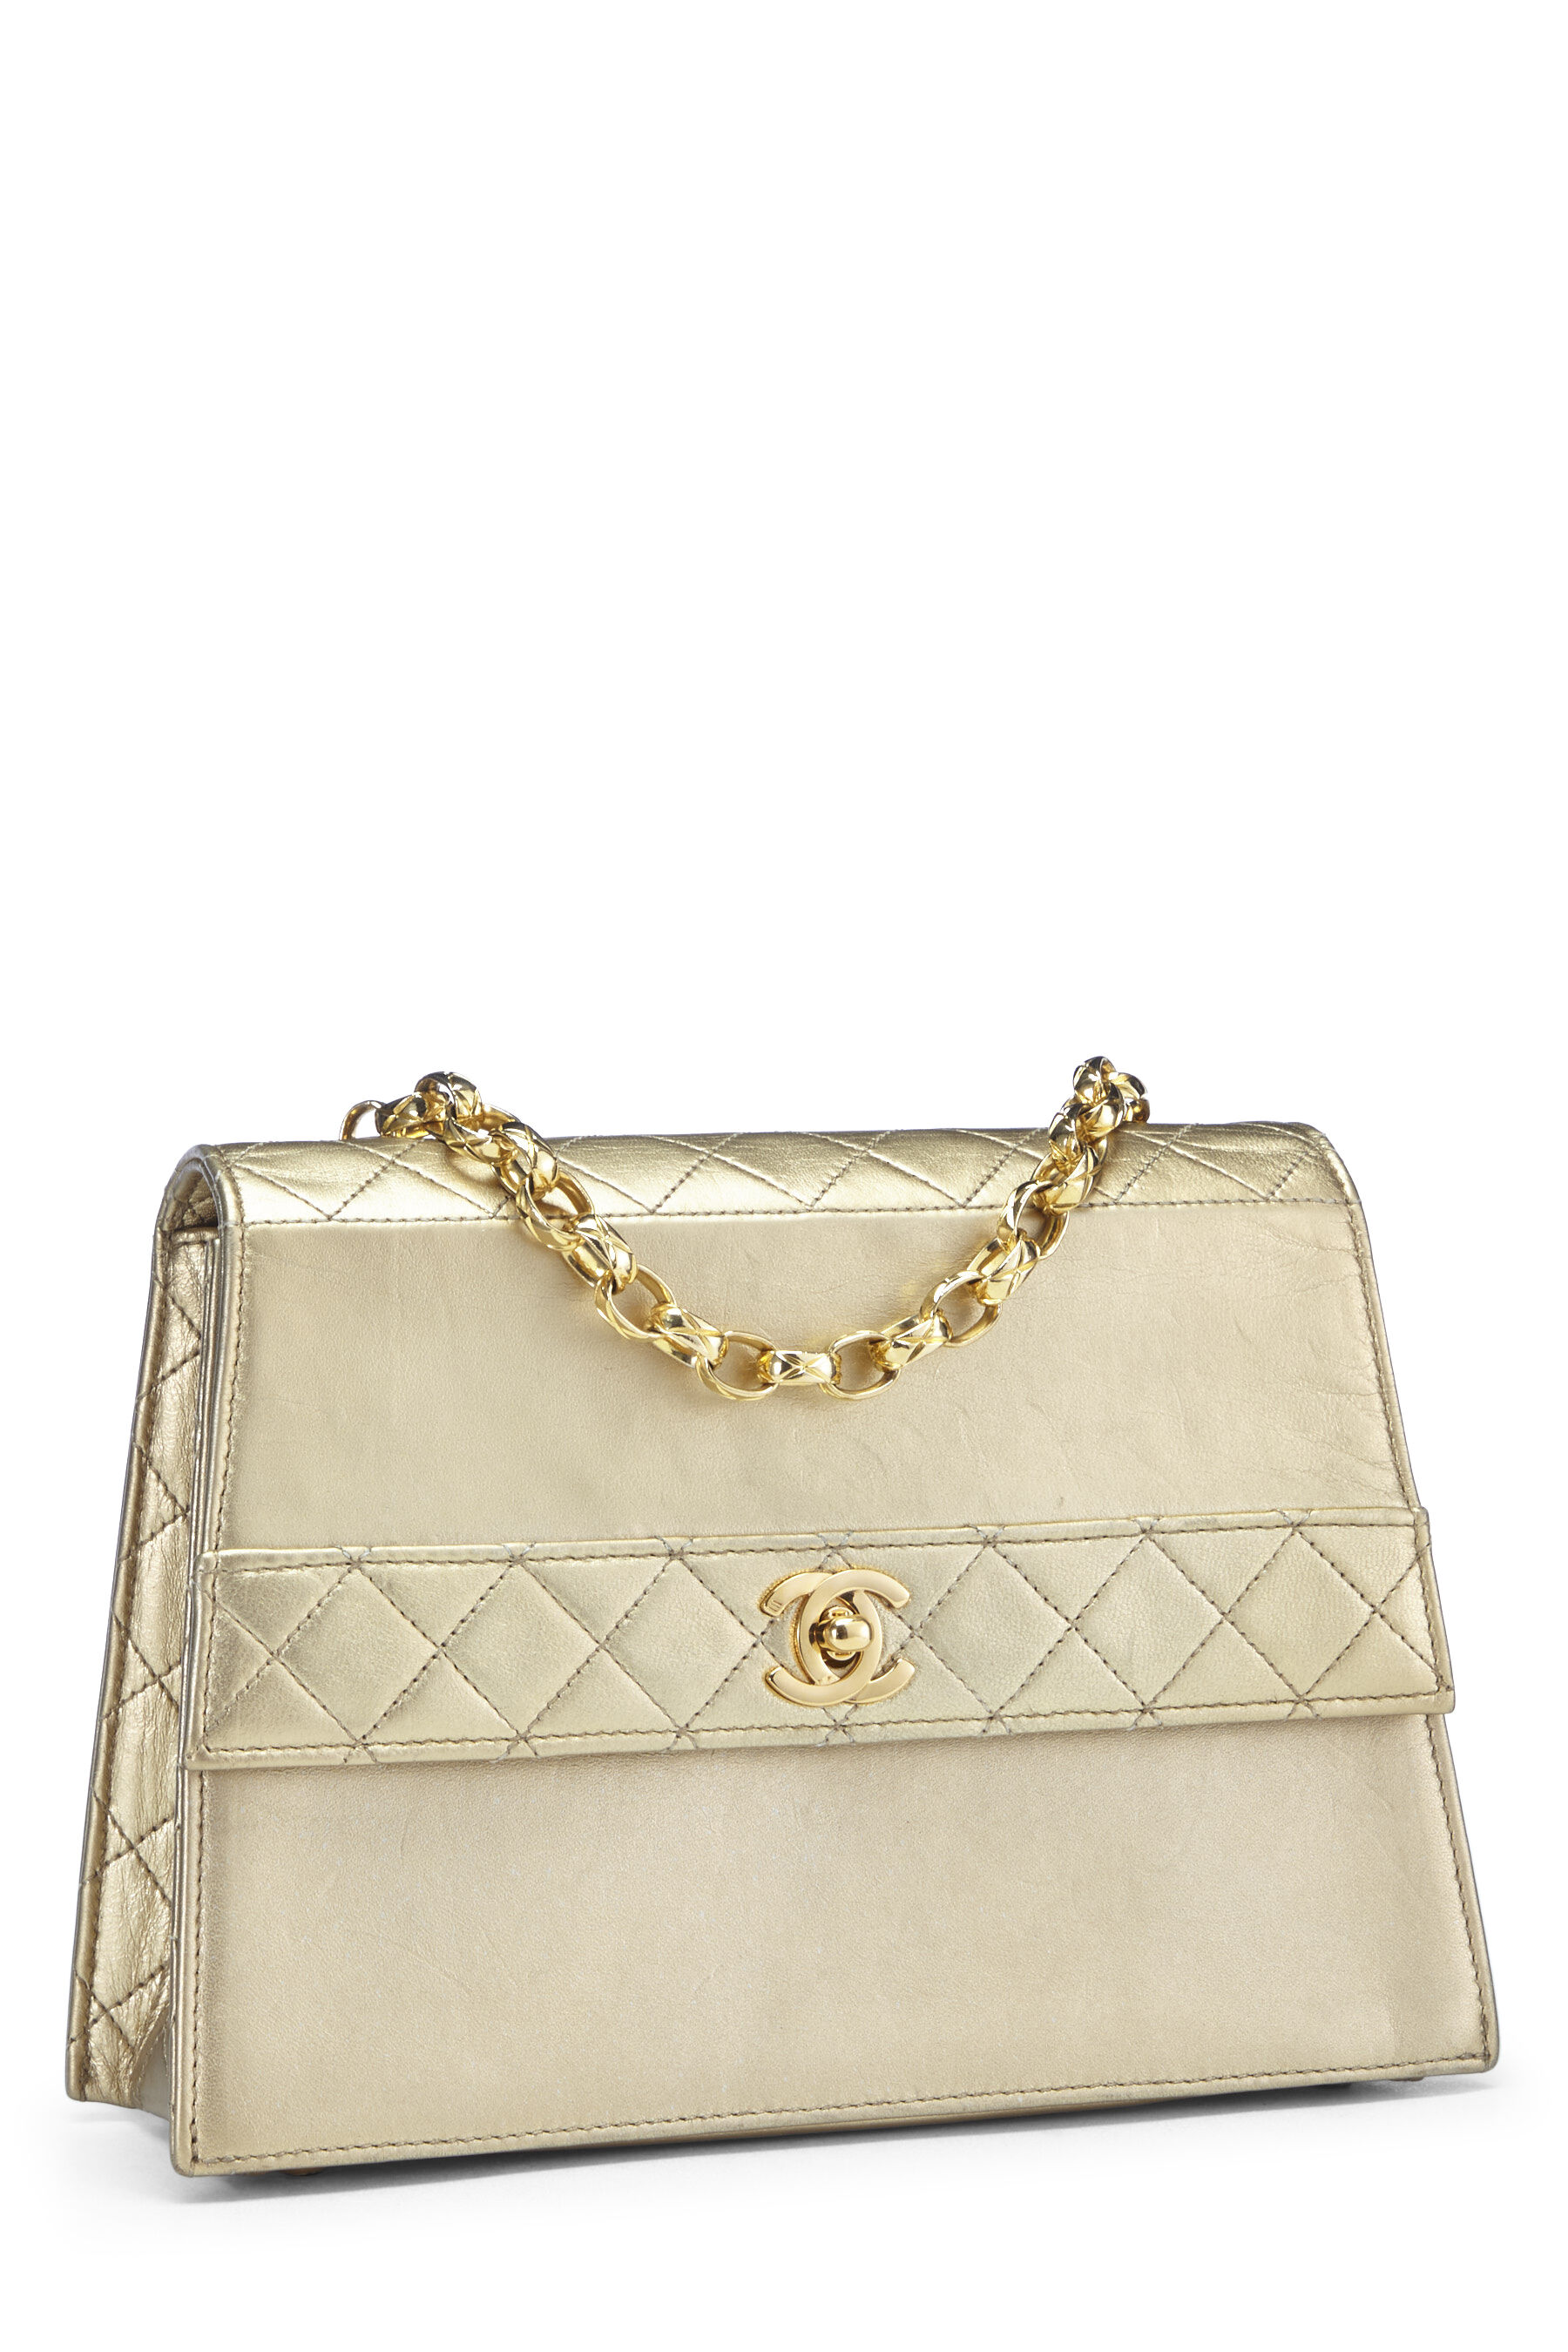 Chanel White Lambskin Trapezoid Bag Q6B0Q11IWB001